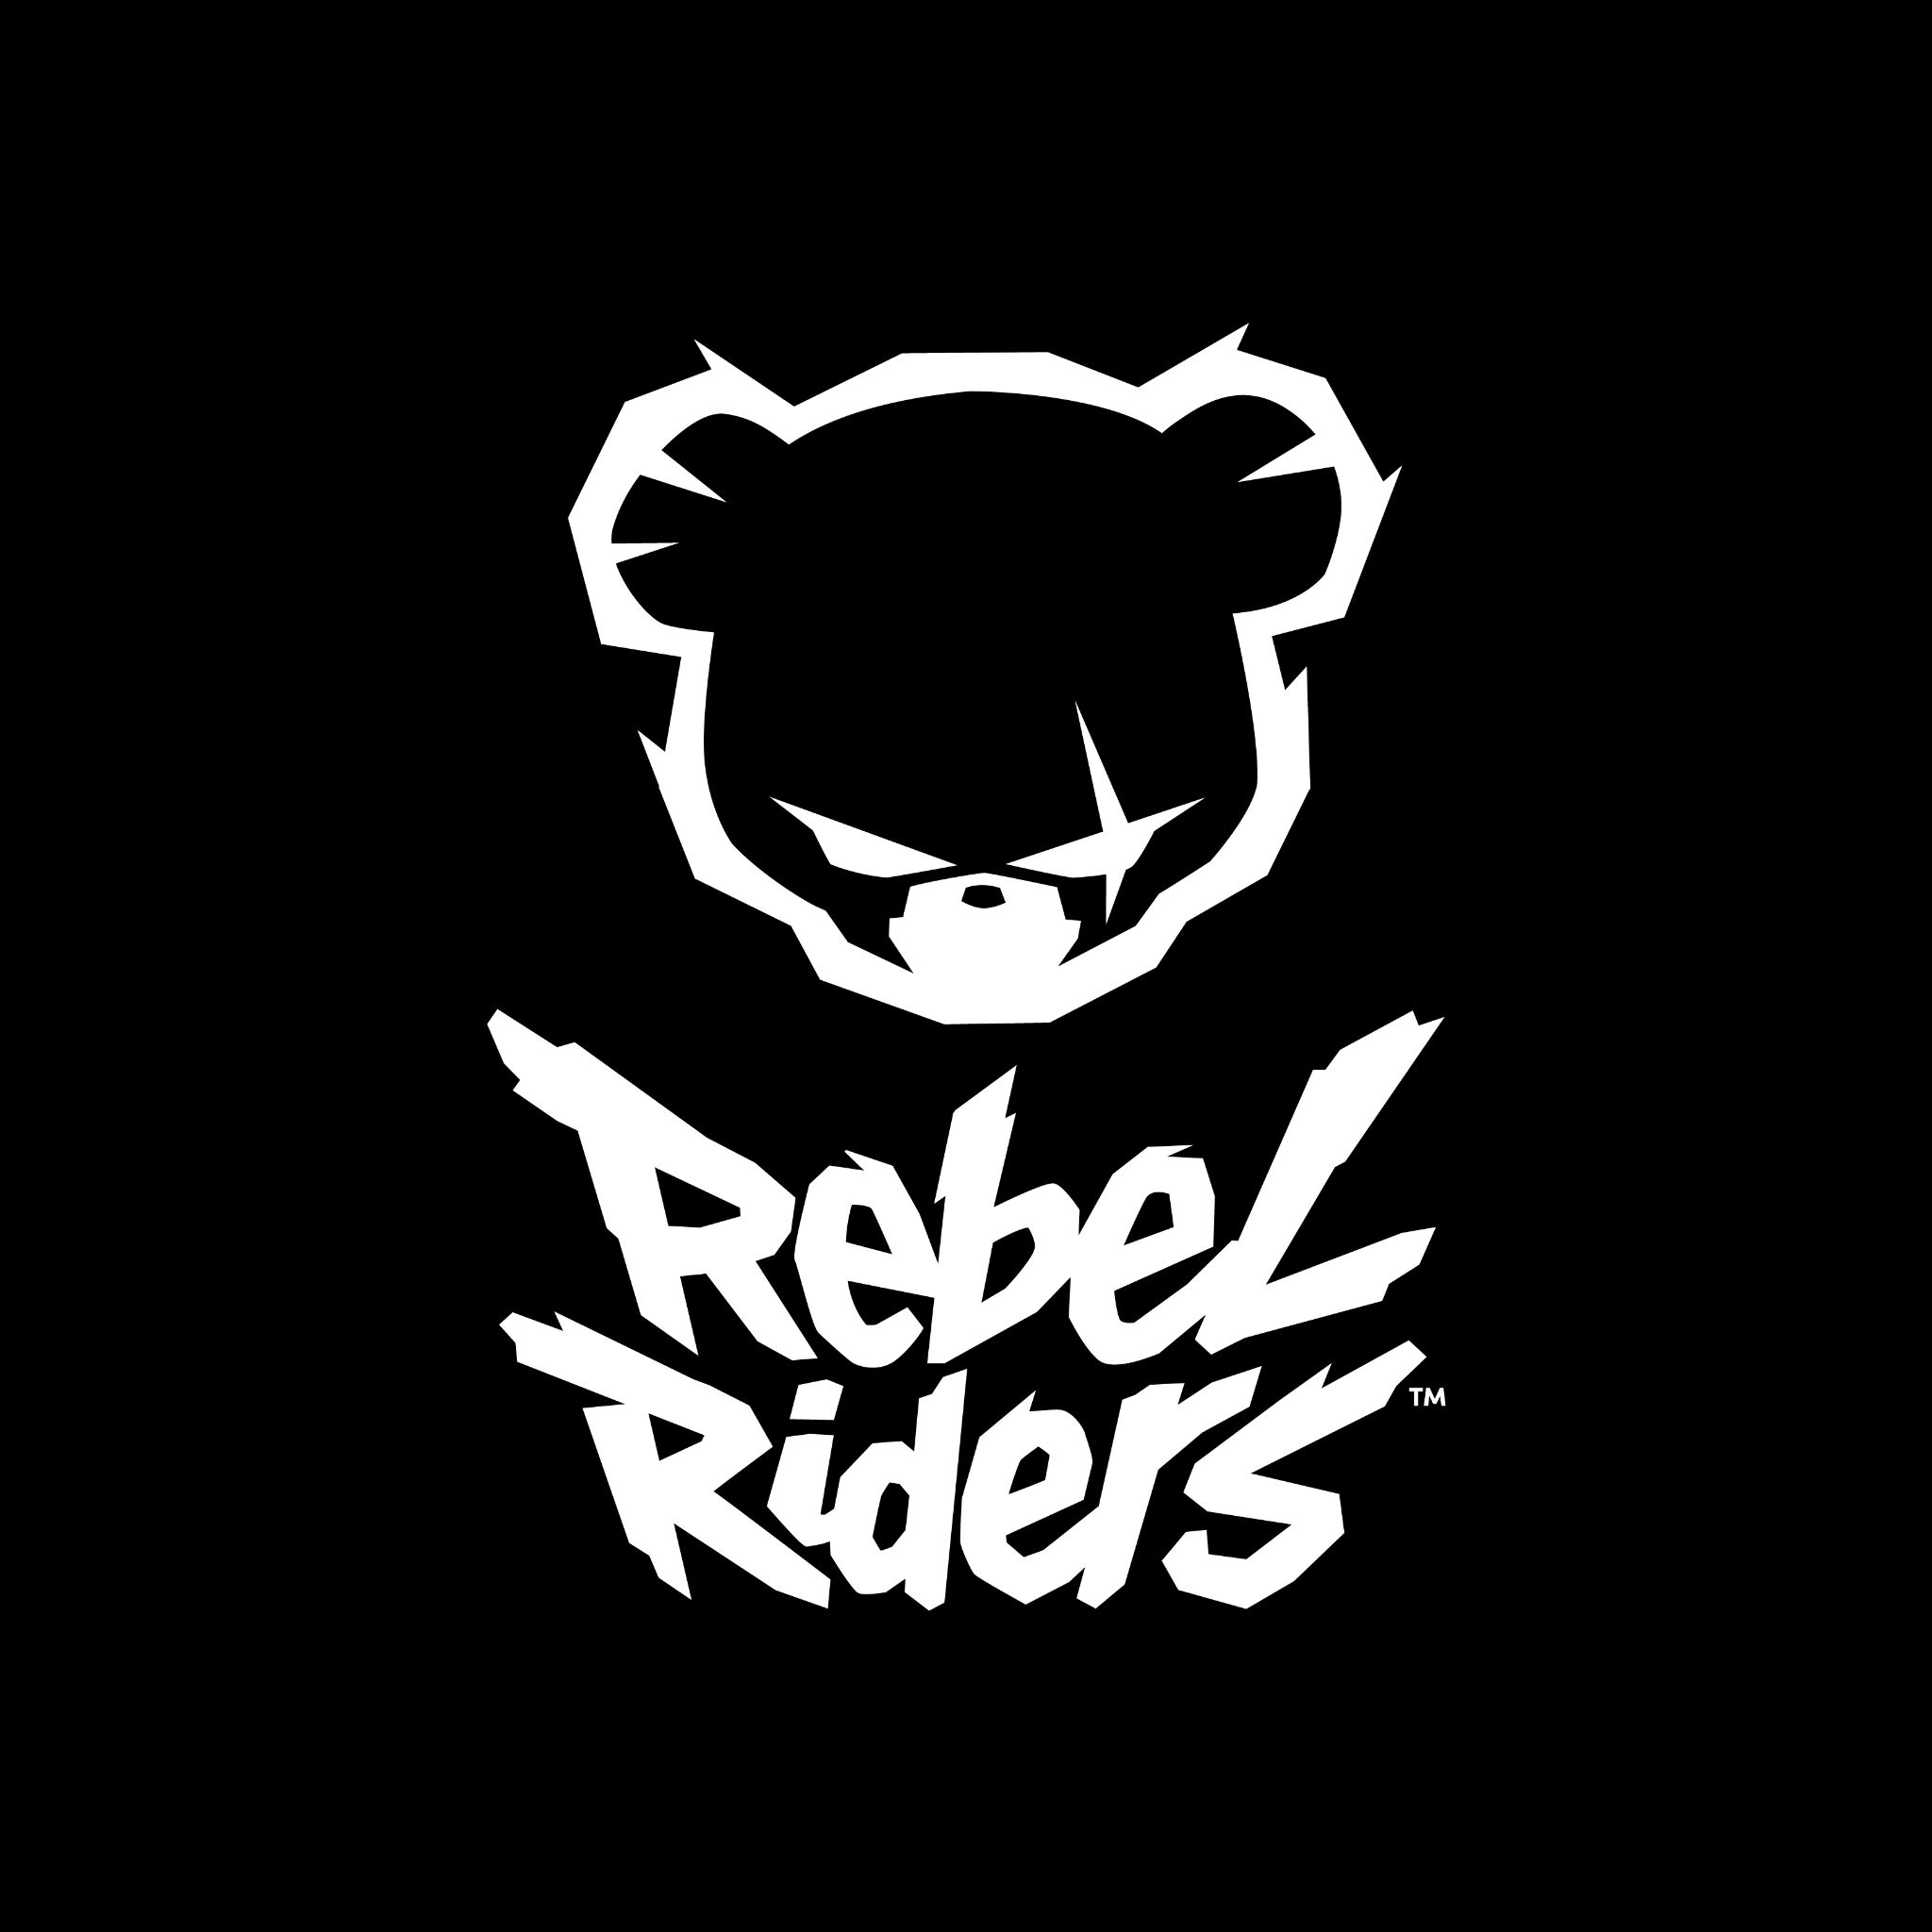 Rebel rider